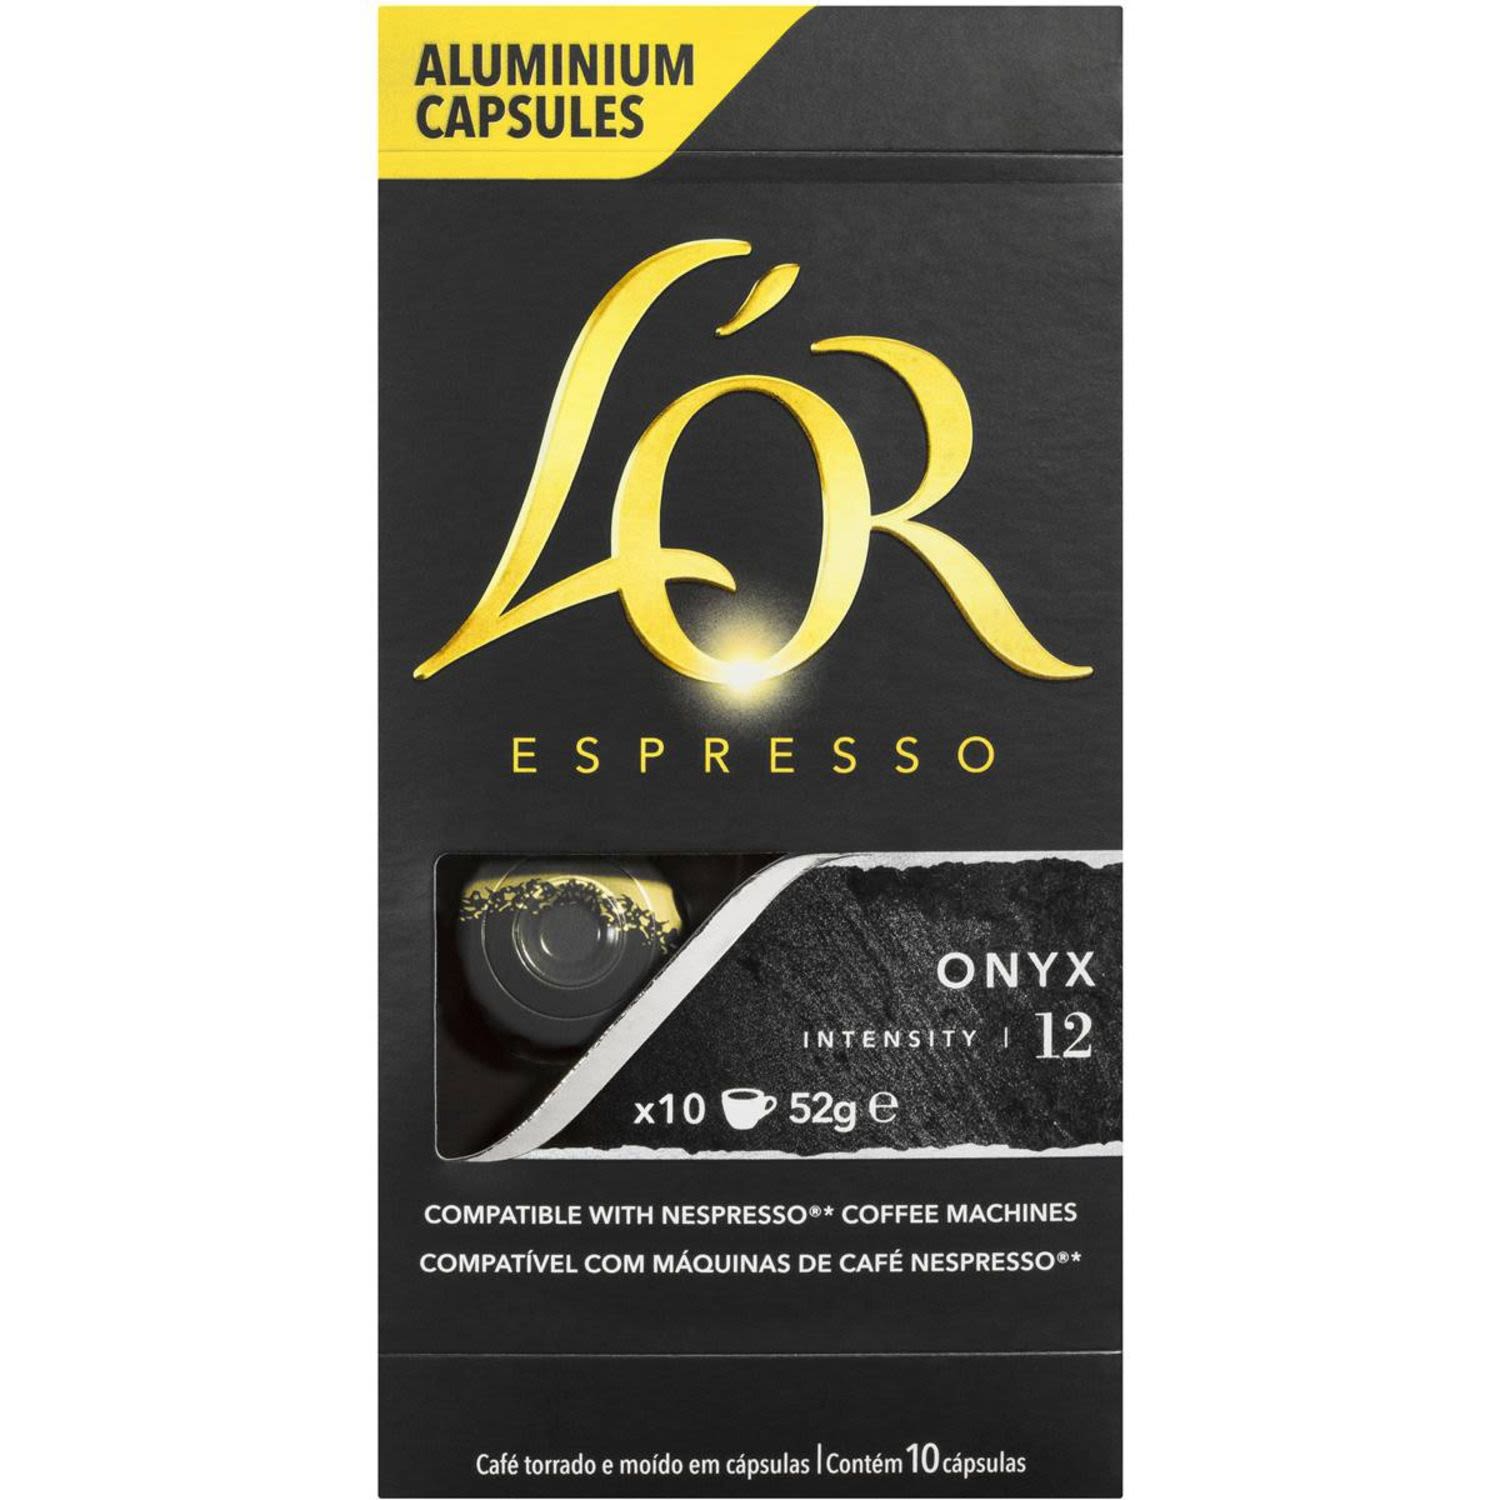 L'OR Espresso Onyx Coffee Capsules Compatible with Nespresso, 10 Each